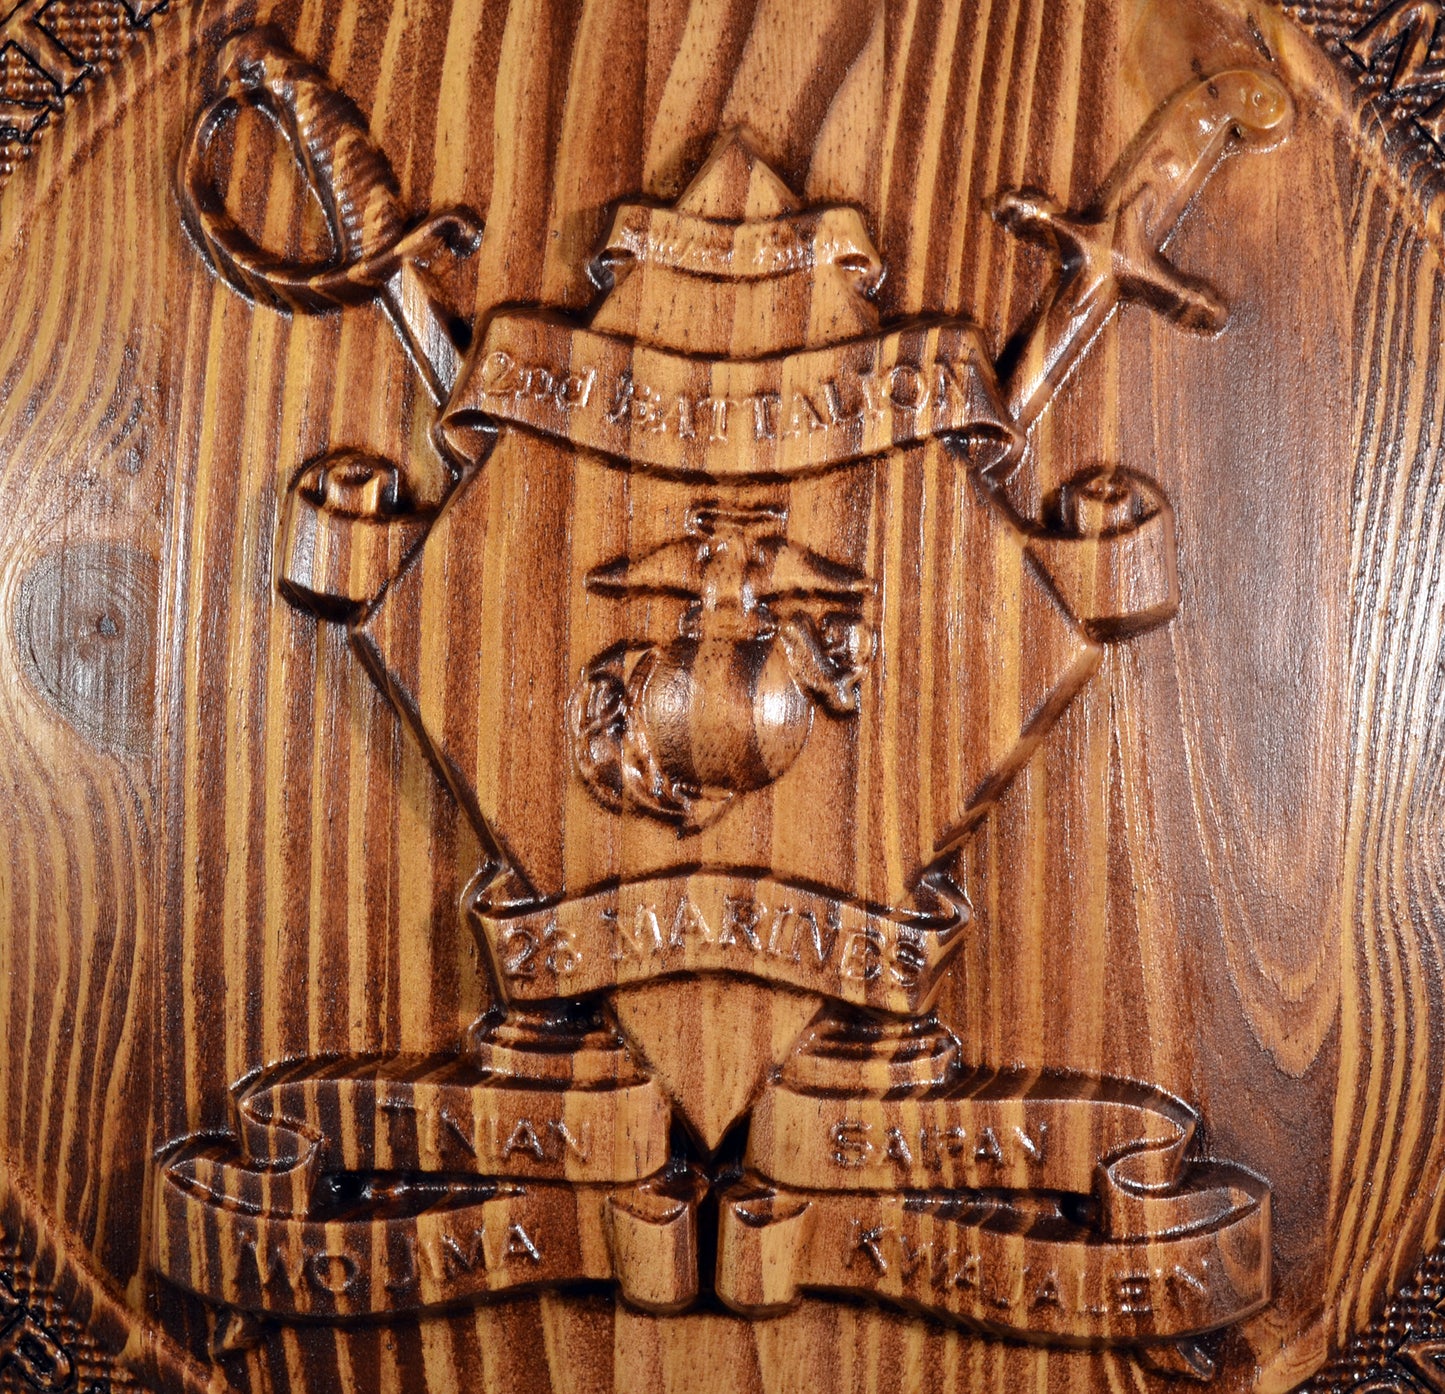 USMC 2nd Battalion 23rd Marines, USMC 3d wood carving, military plaque